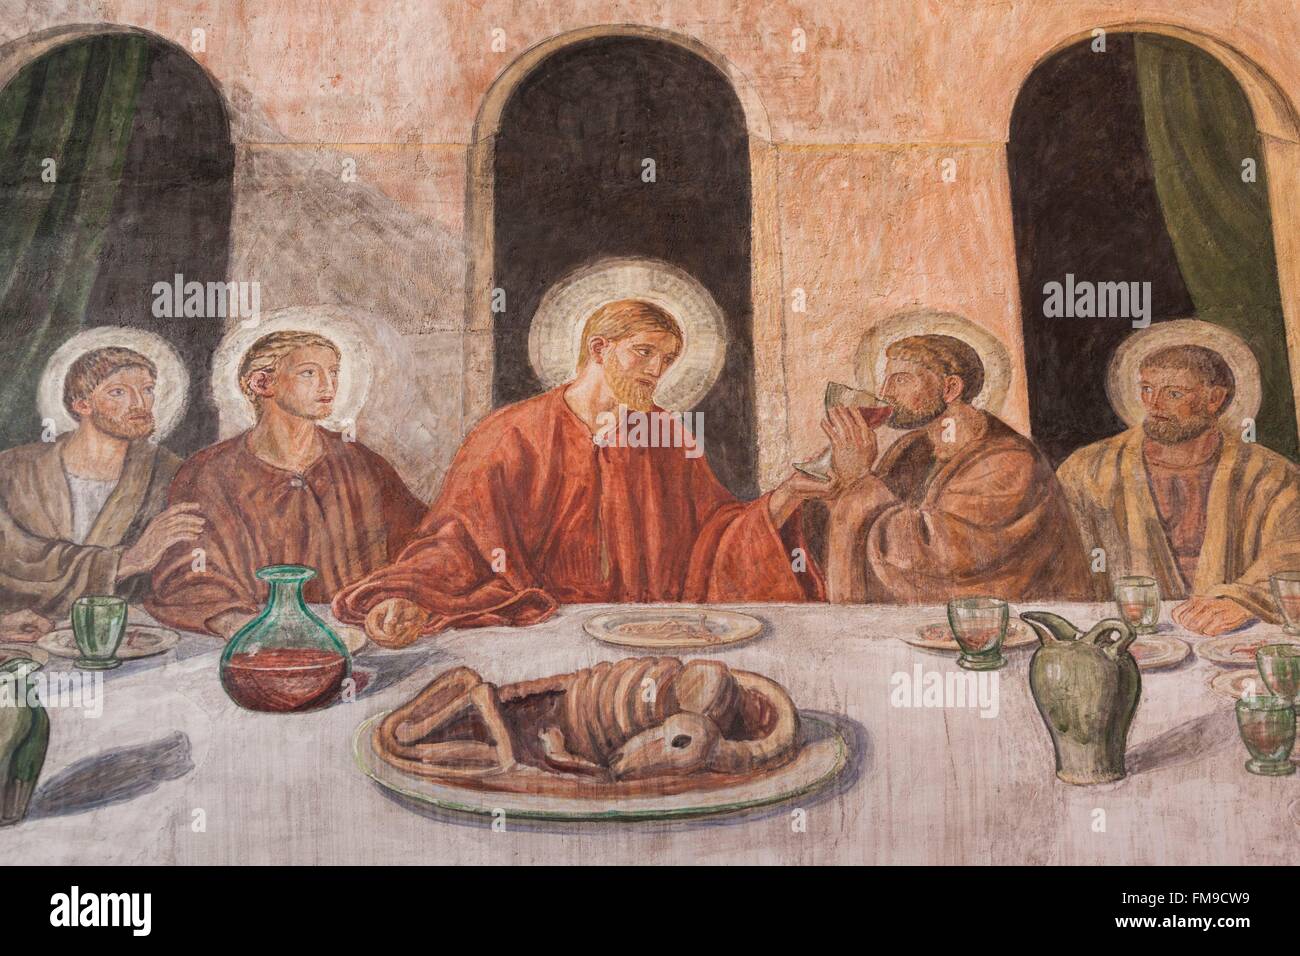 Denmark, Jutland, Viborg, Viborg Domkirke Cathdral, interior frescoes of Jesus Christ and the Last Supper Stock Photo